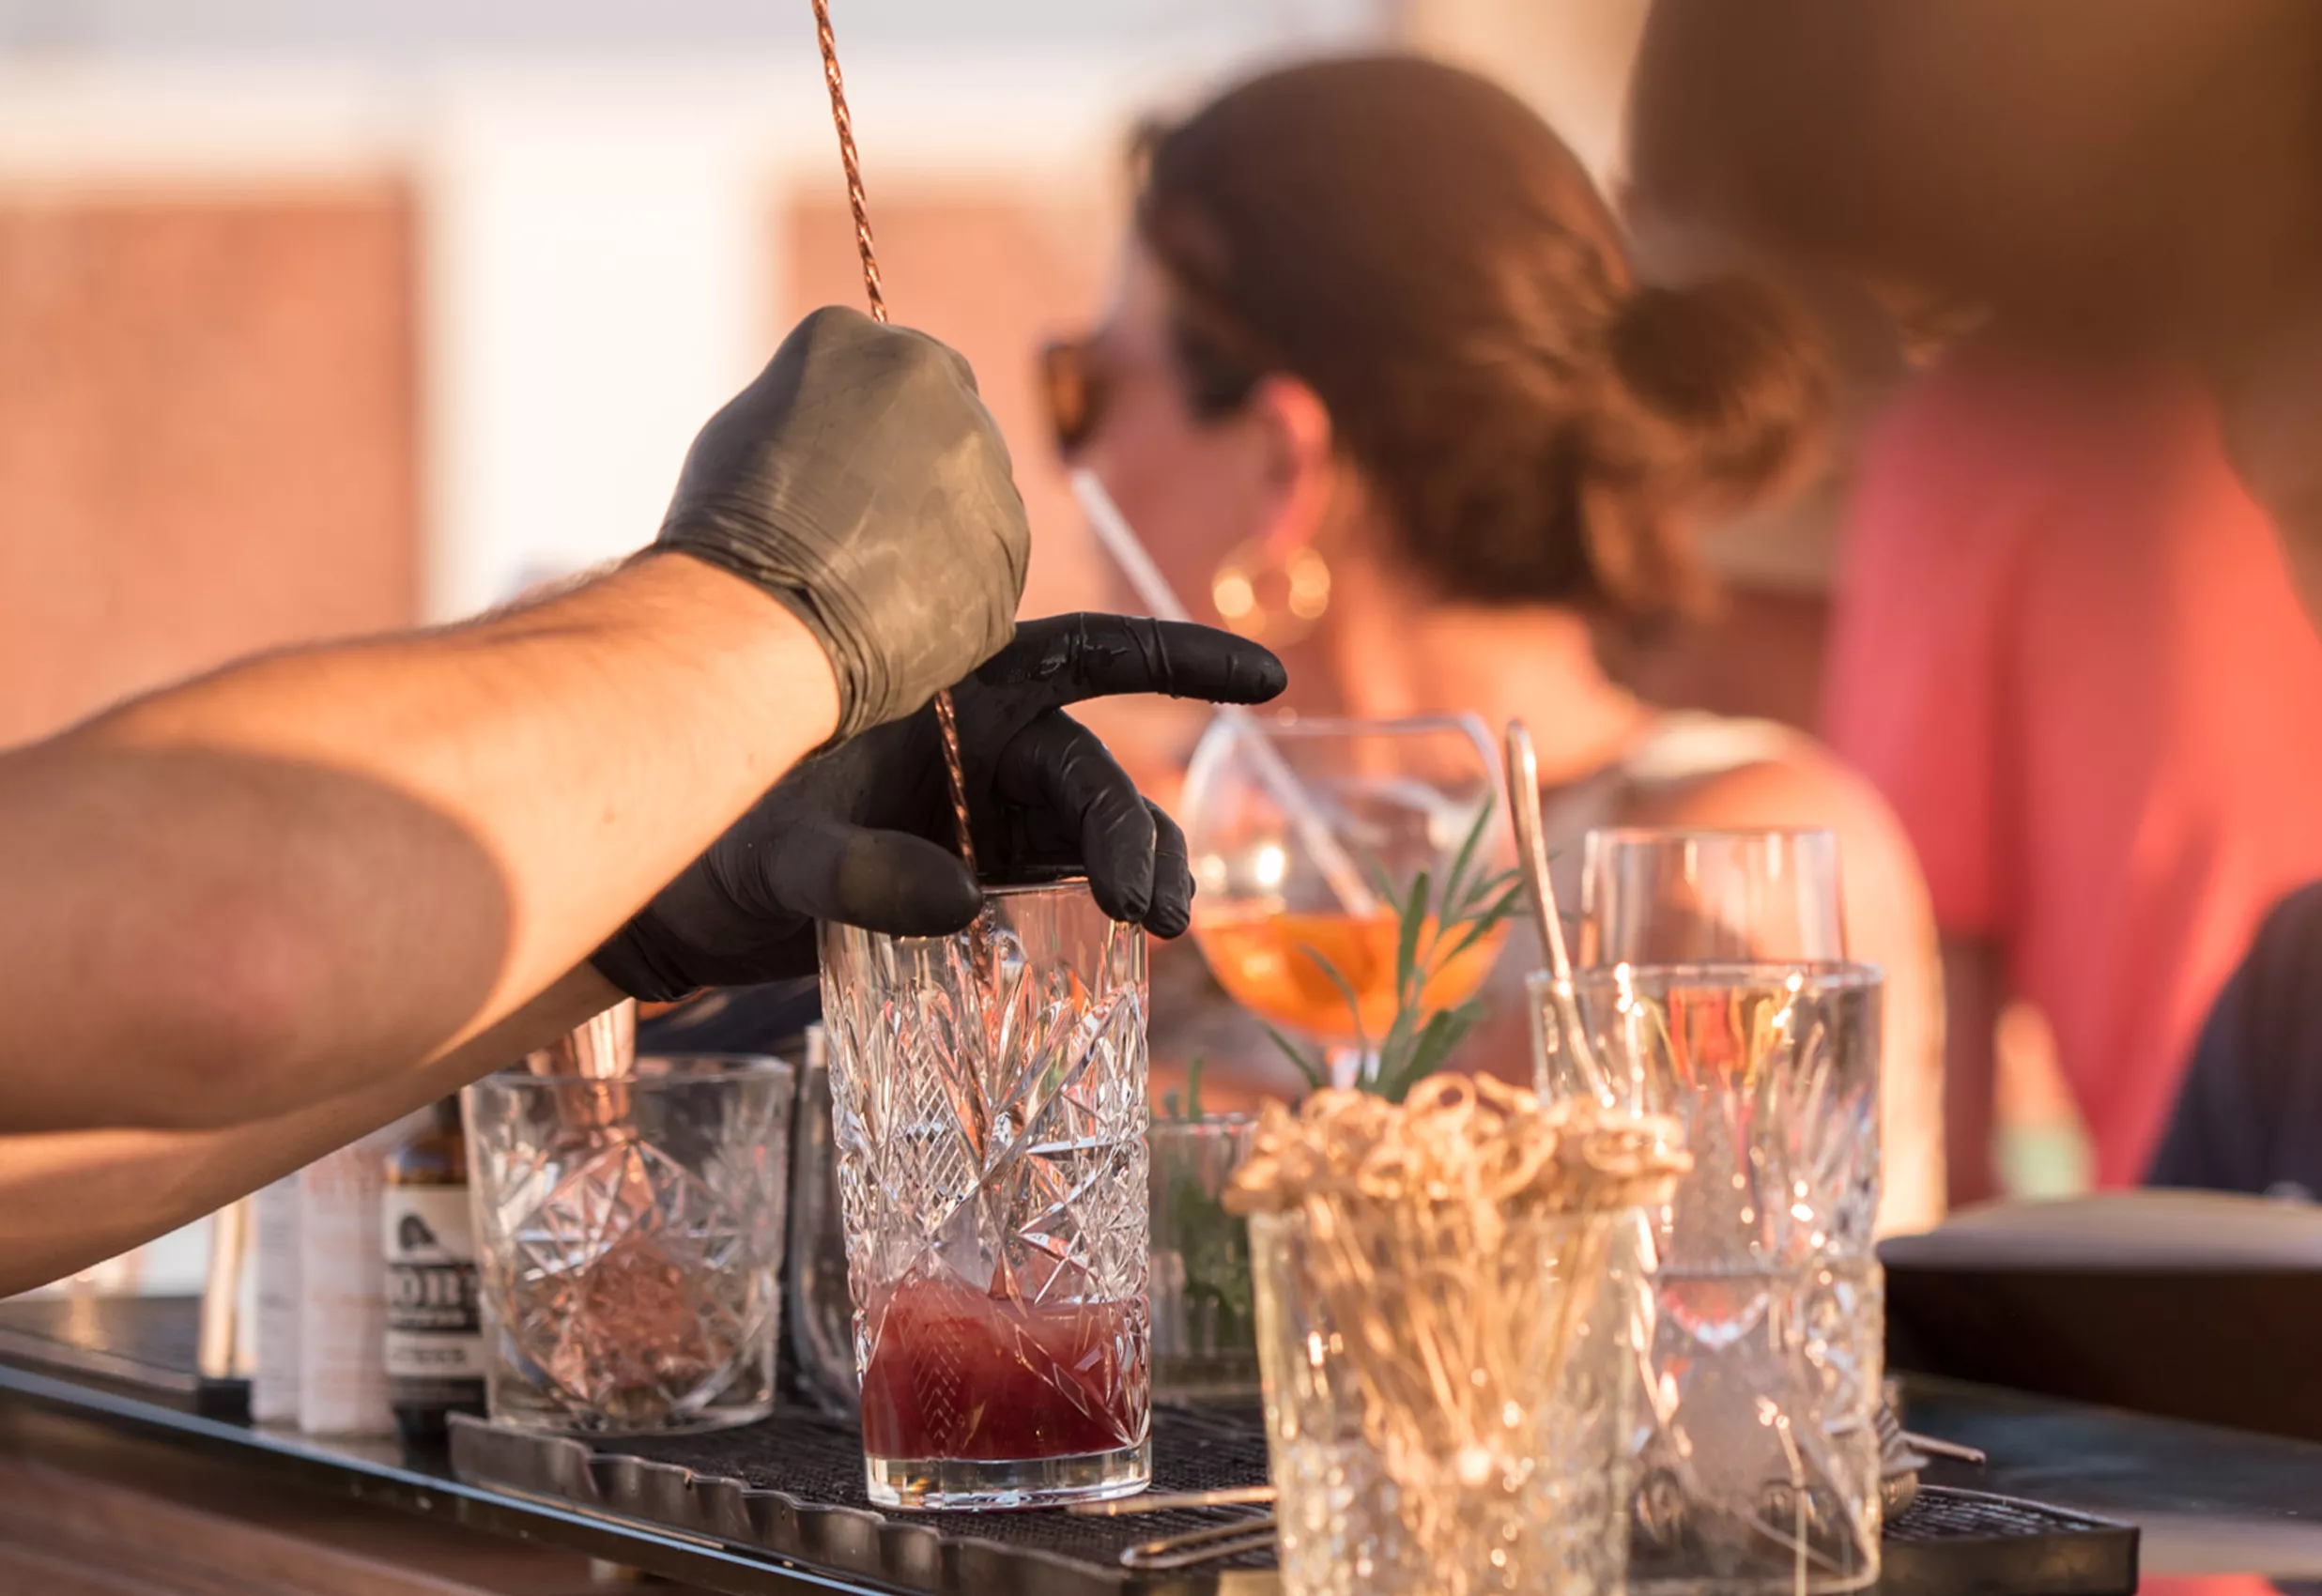 Sun Spirit Cocktail Bar in Greece, Europe | Bars - Rated 0.8